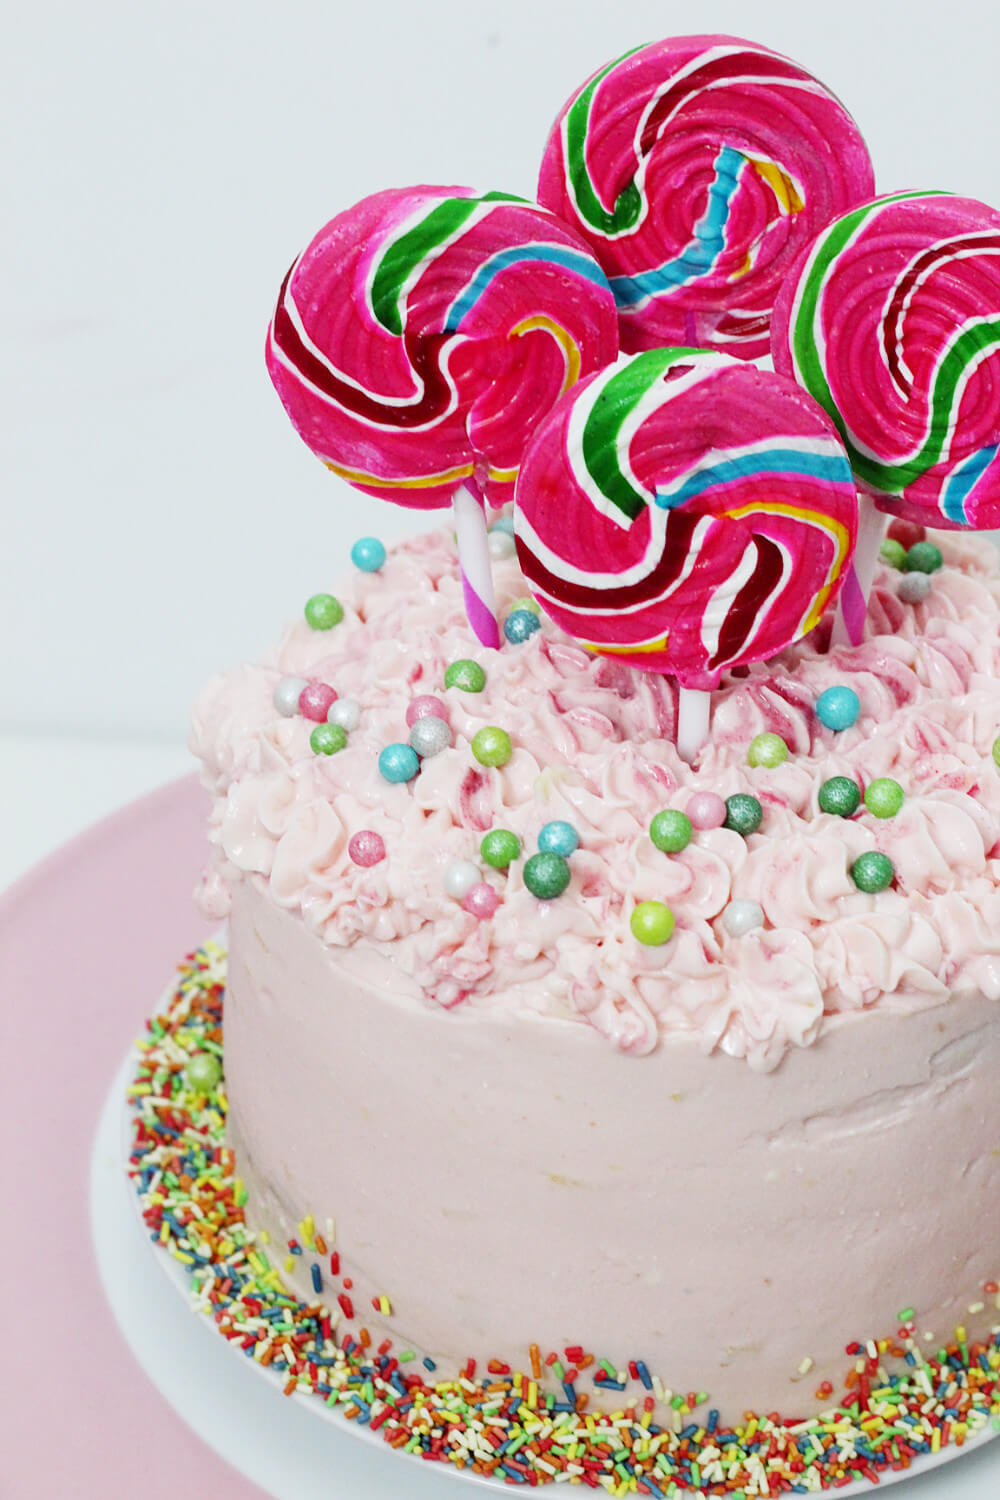 Rezept: Überraschungs-Torte mit Zuckerstreusel-Füllung backen